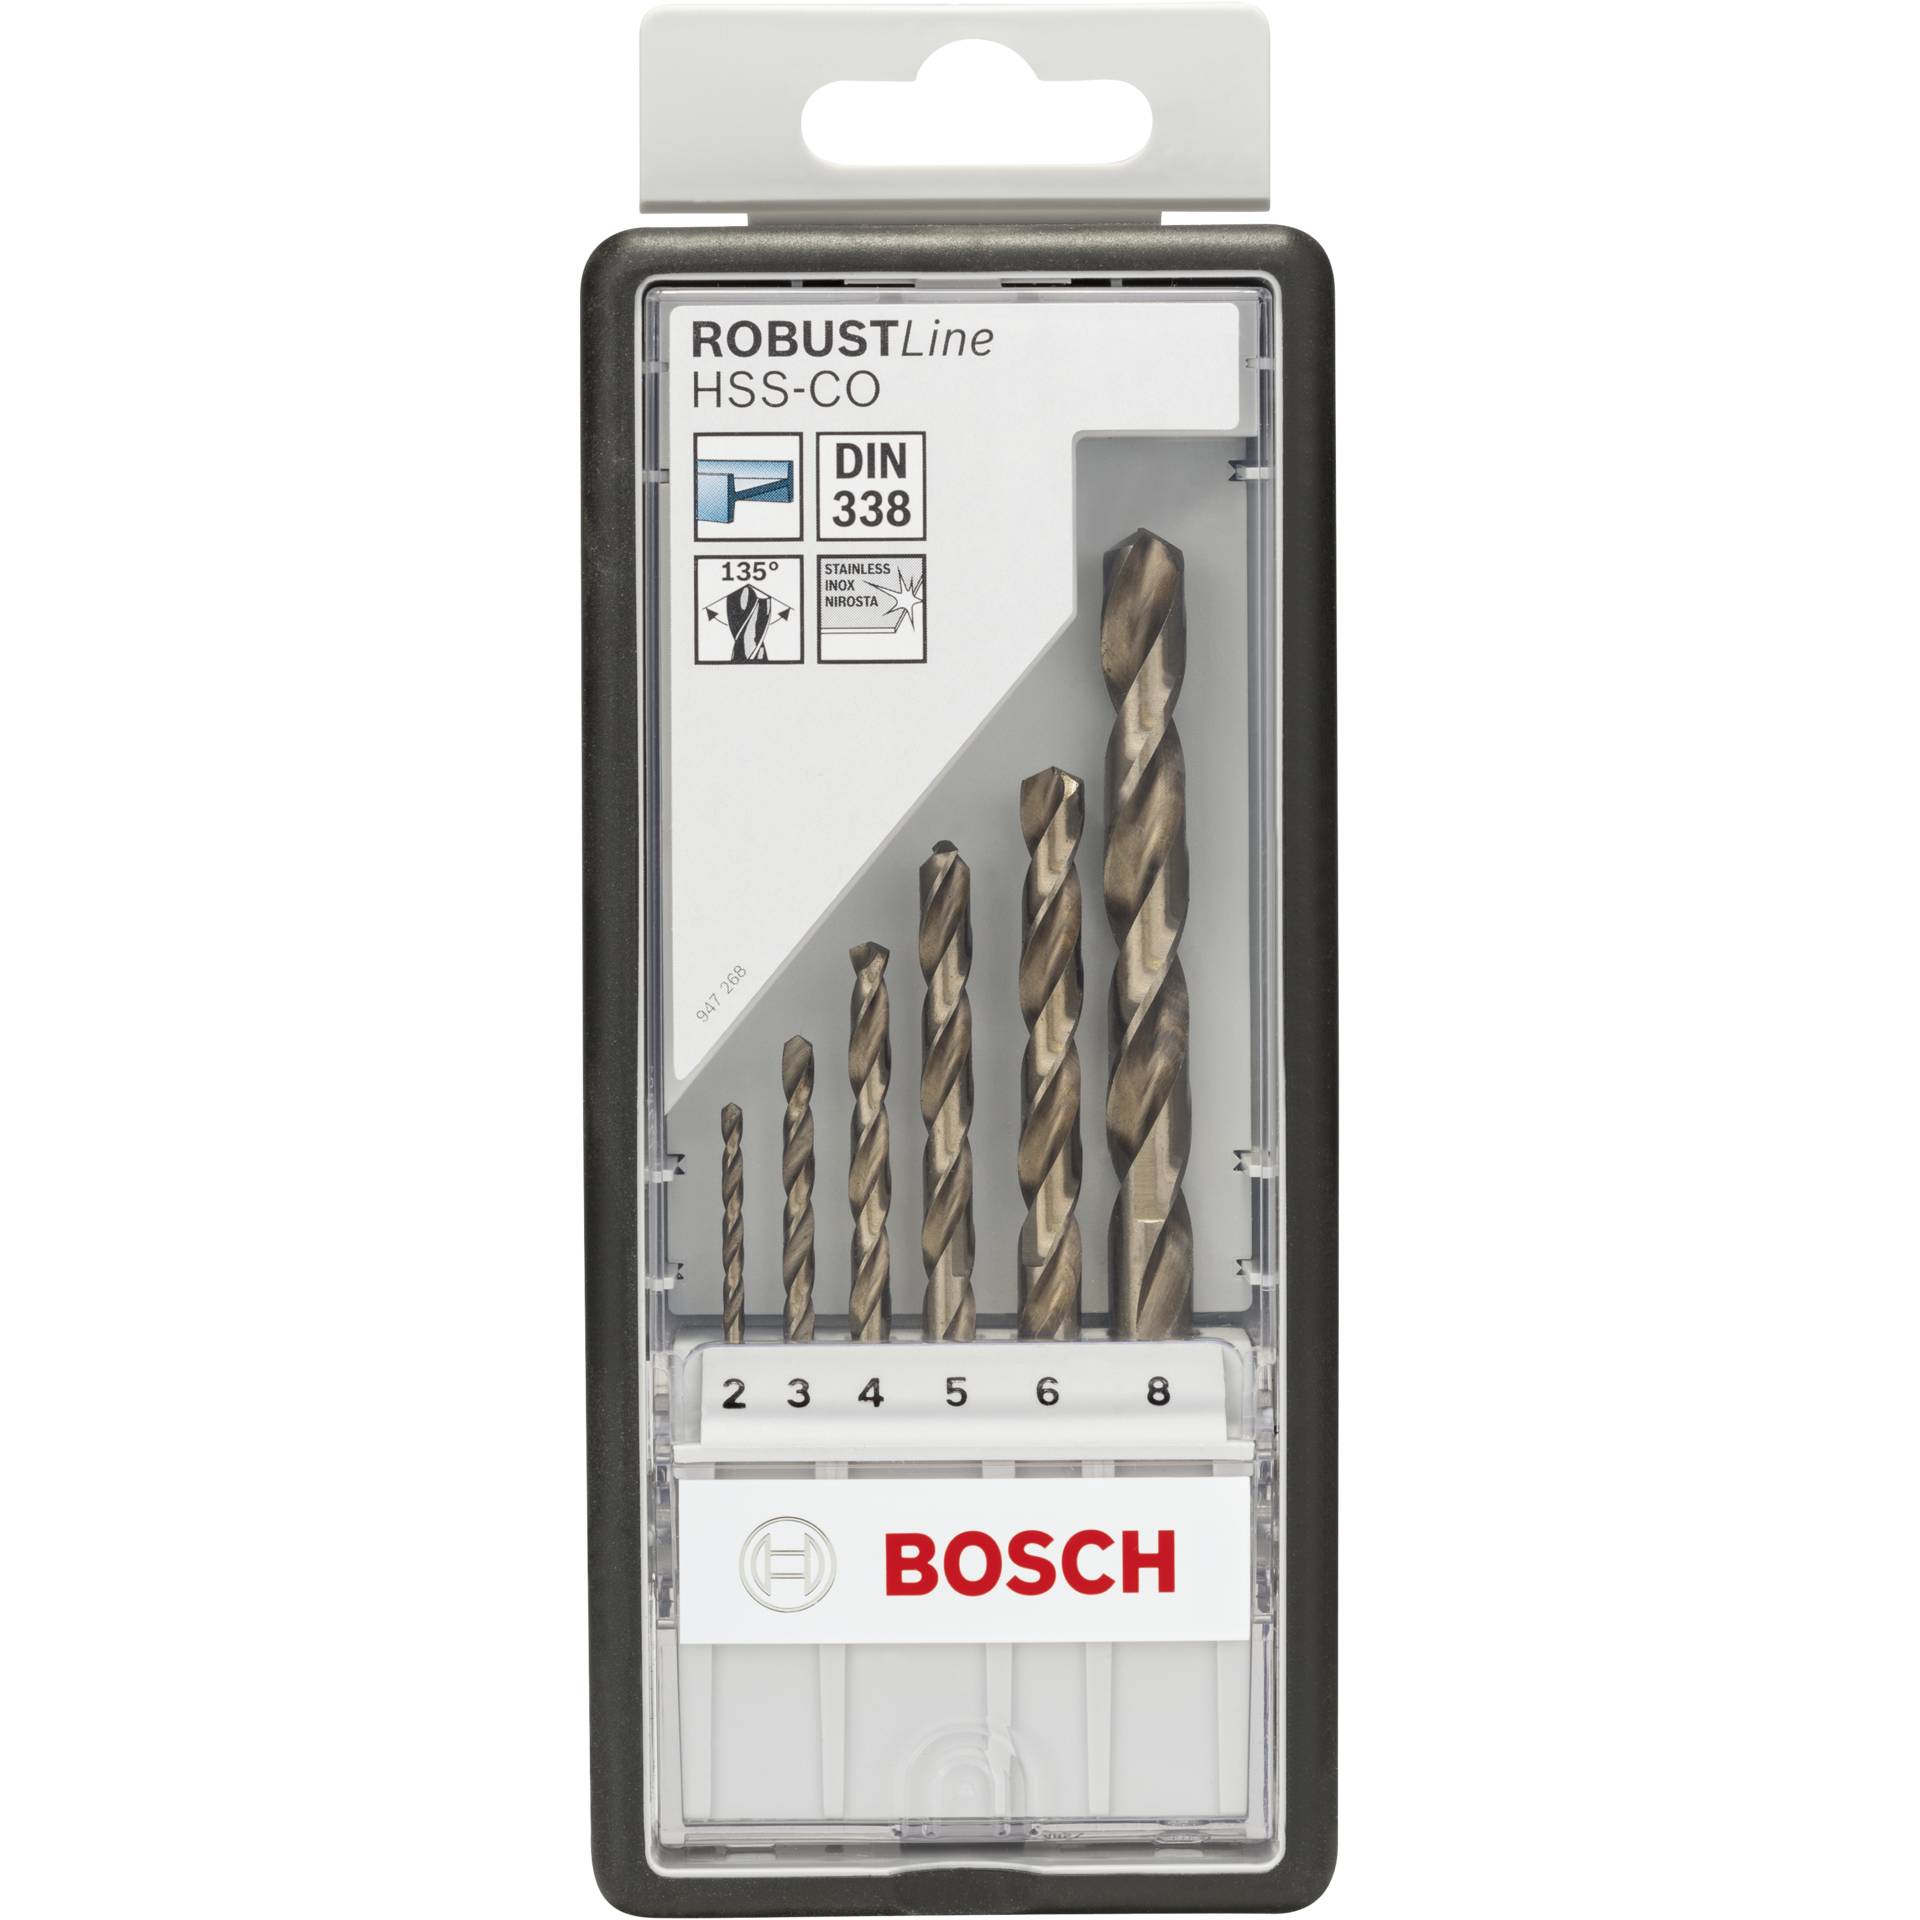 Bosch RobustLine HSS-Co 6 pz. set trapano